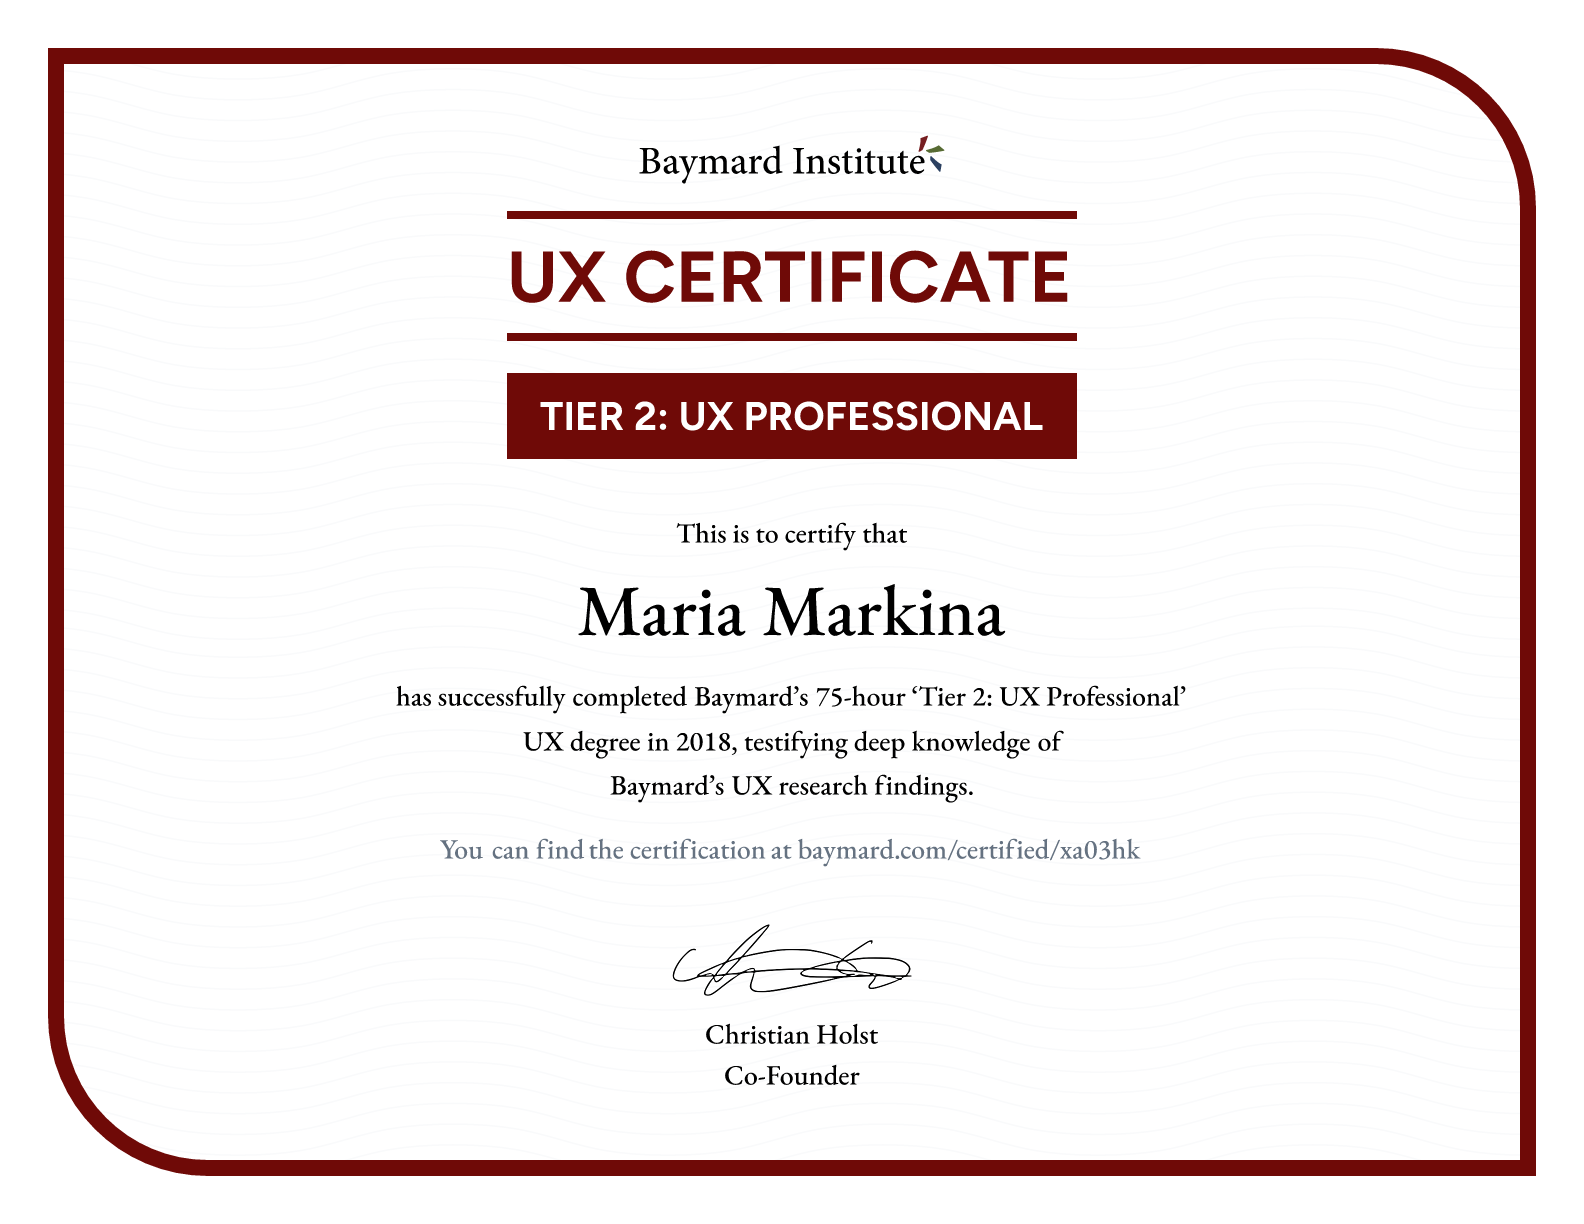 Maria Markina’s certificate